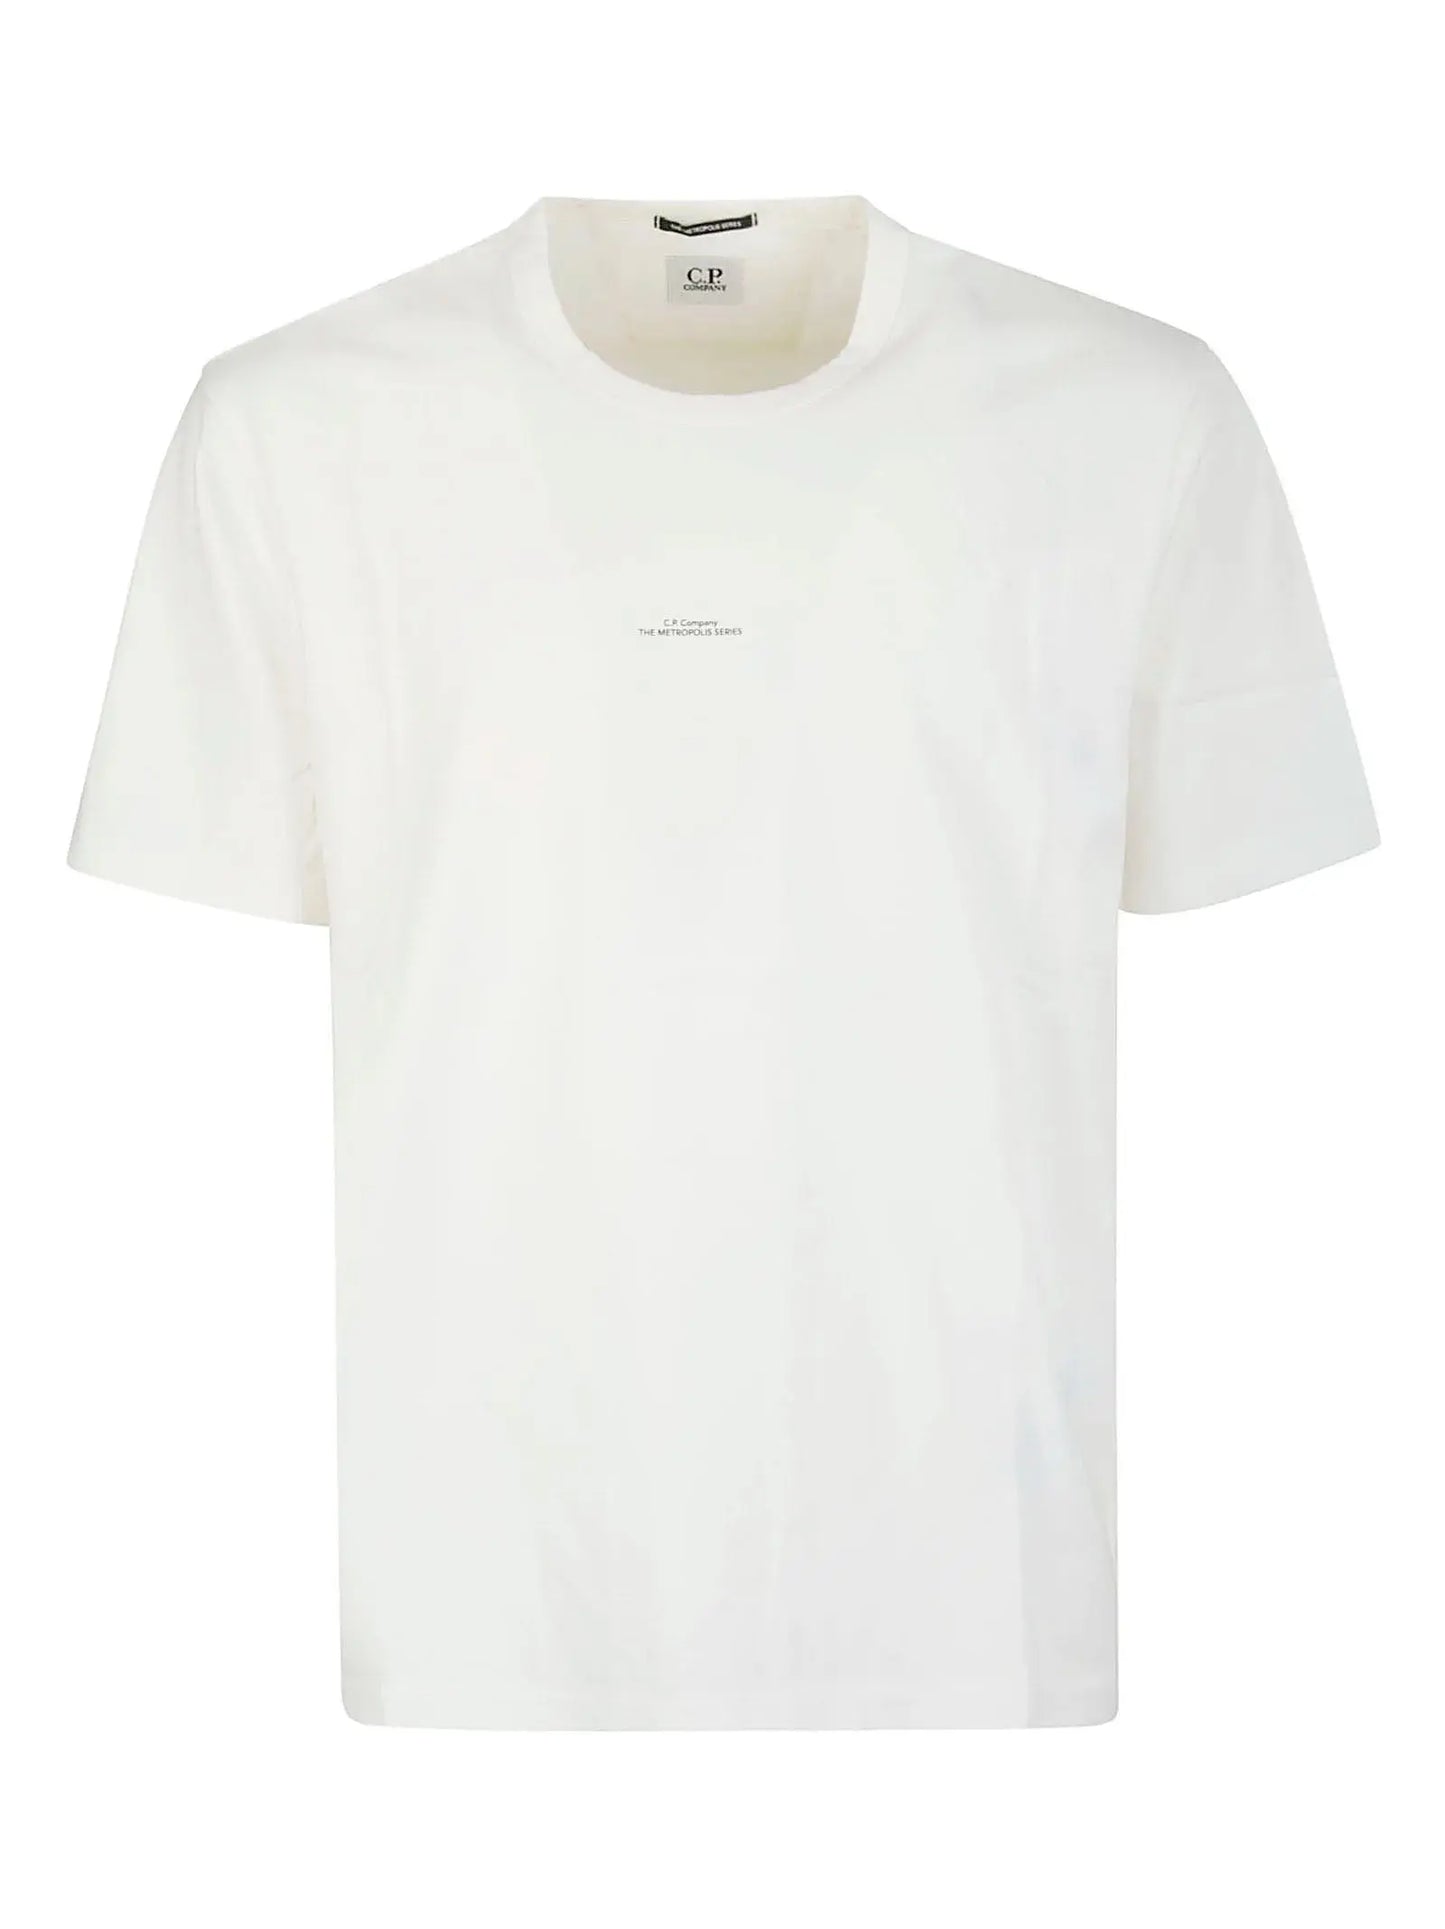 C.P Company Metropolis Centre Logo White T-Shirt - flizzone